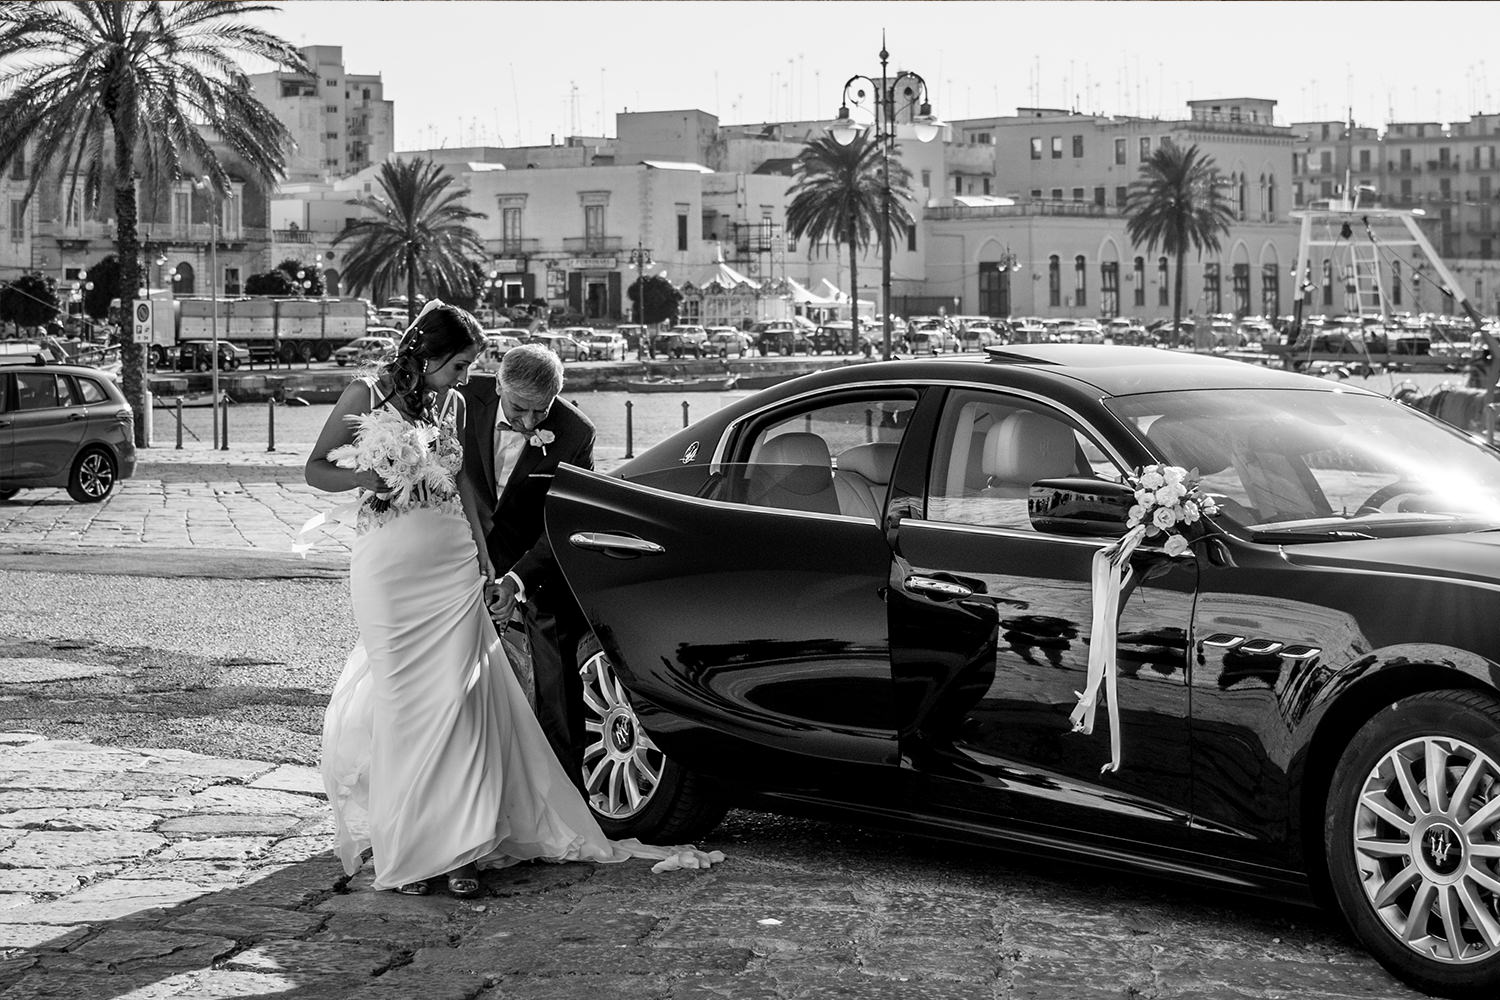 Le Nozze Ideali | Apulian Weddings